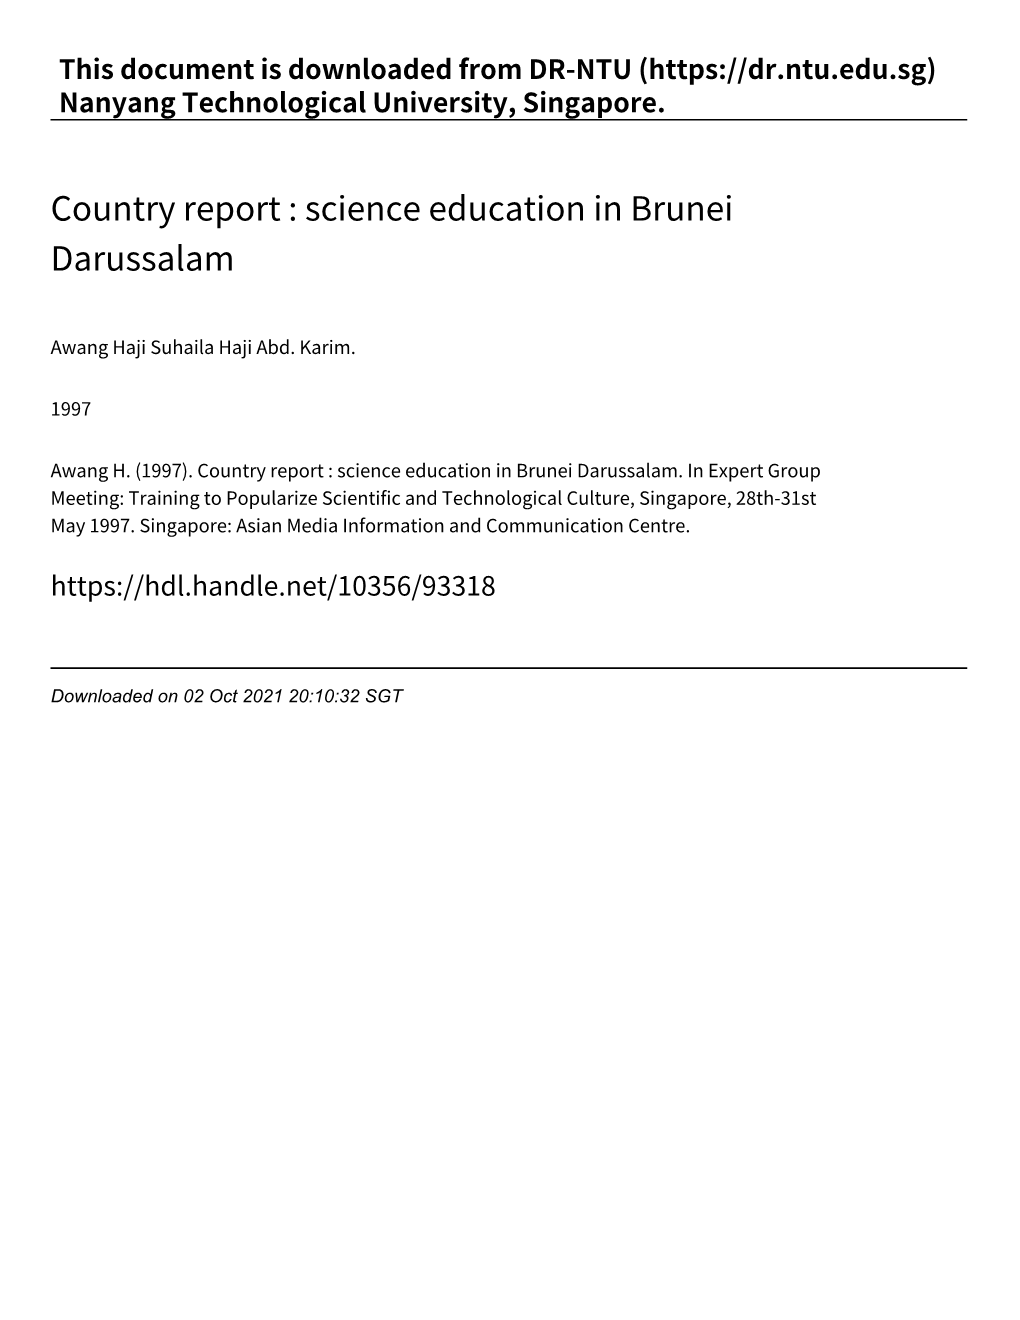 Science Education in Brunei Darussalam